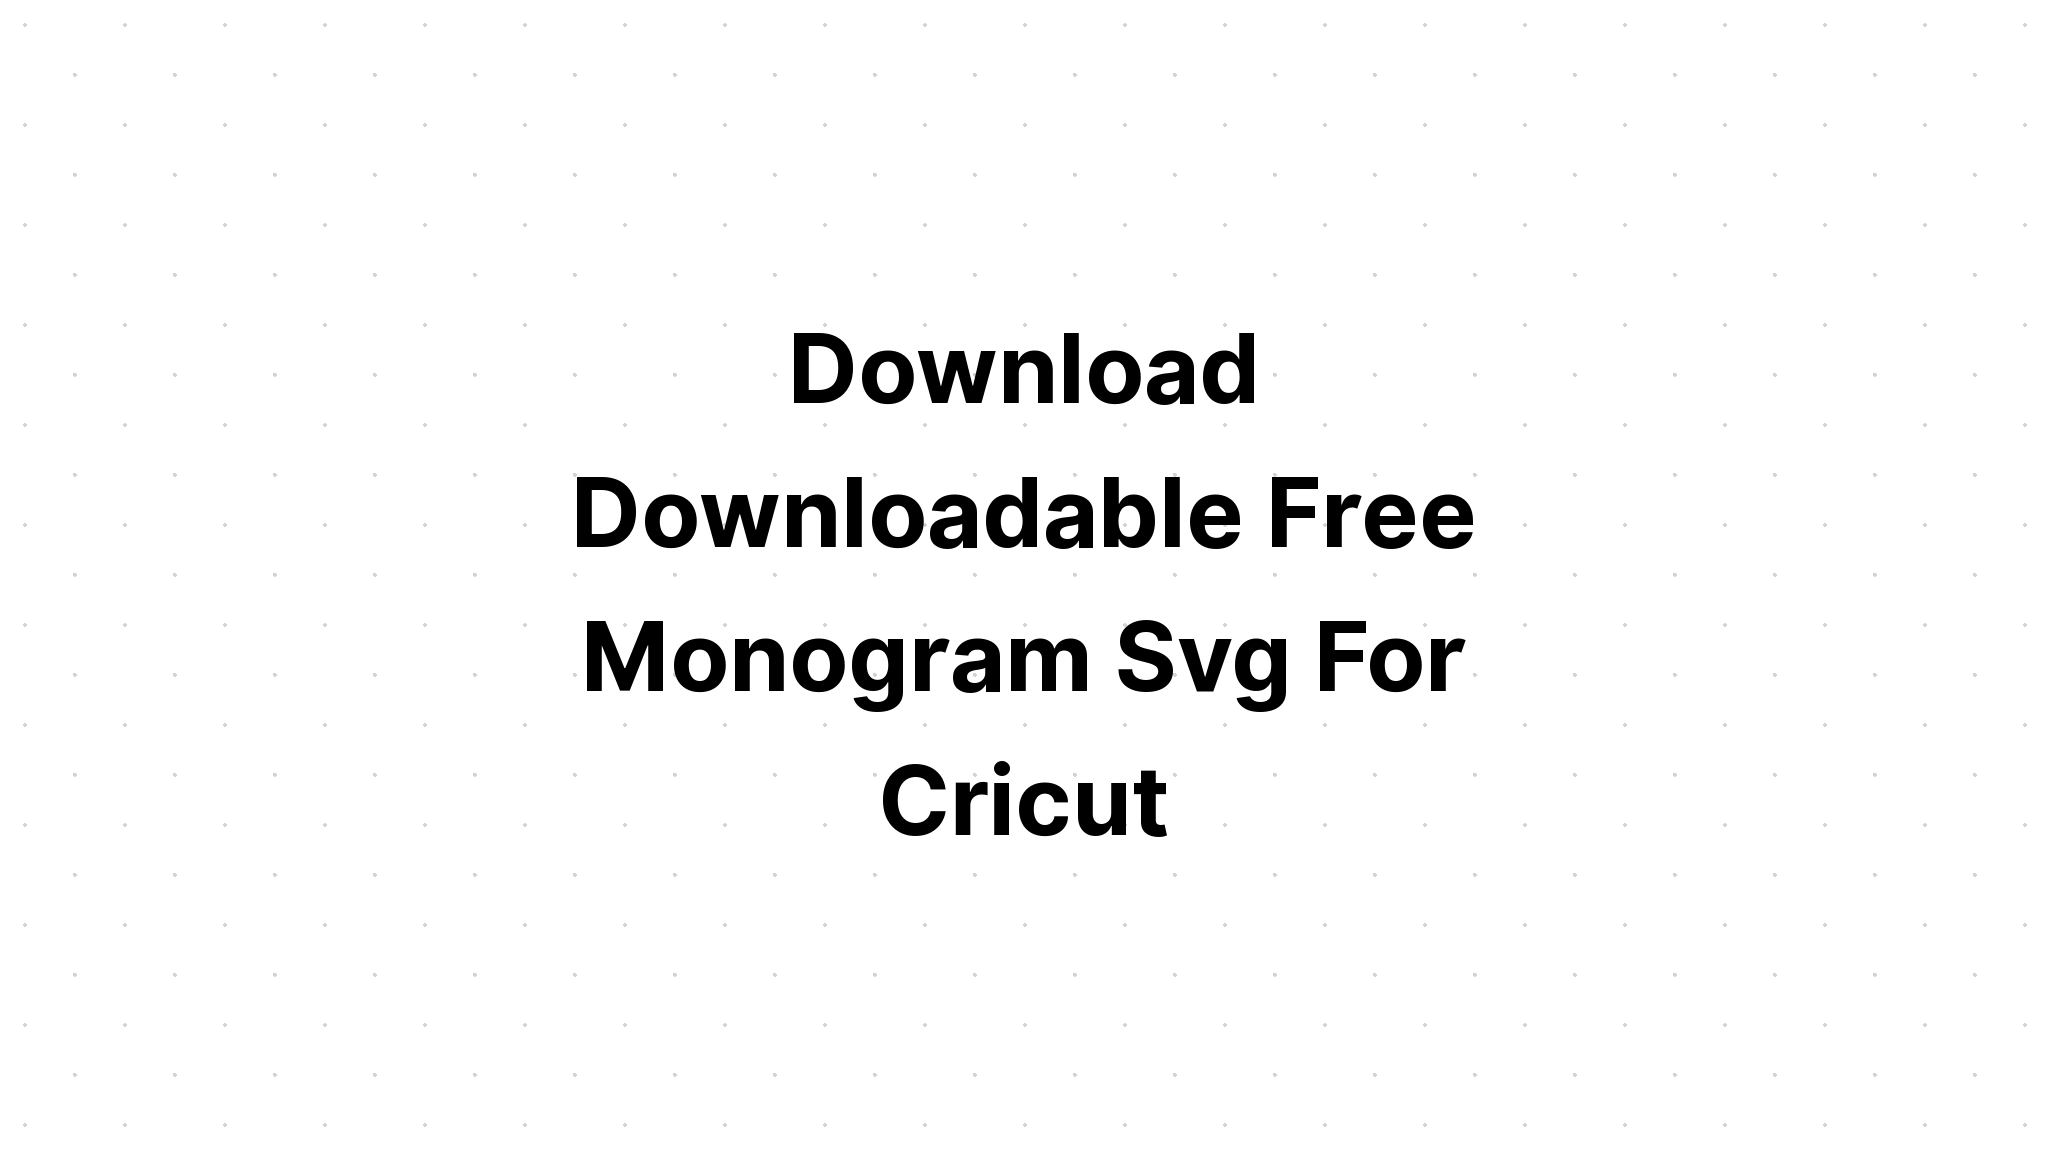 Download Arrow Circle Monogram Svg - Free SVG Cut File